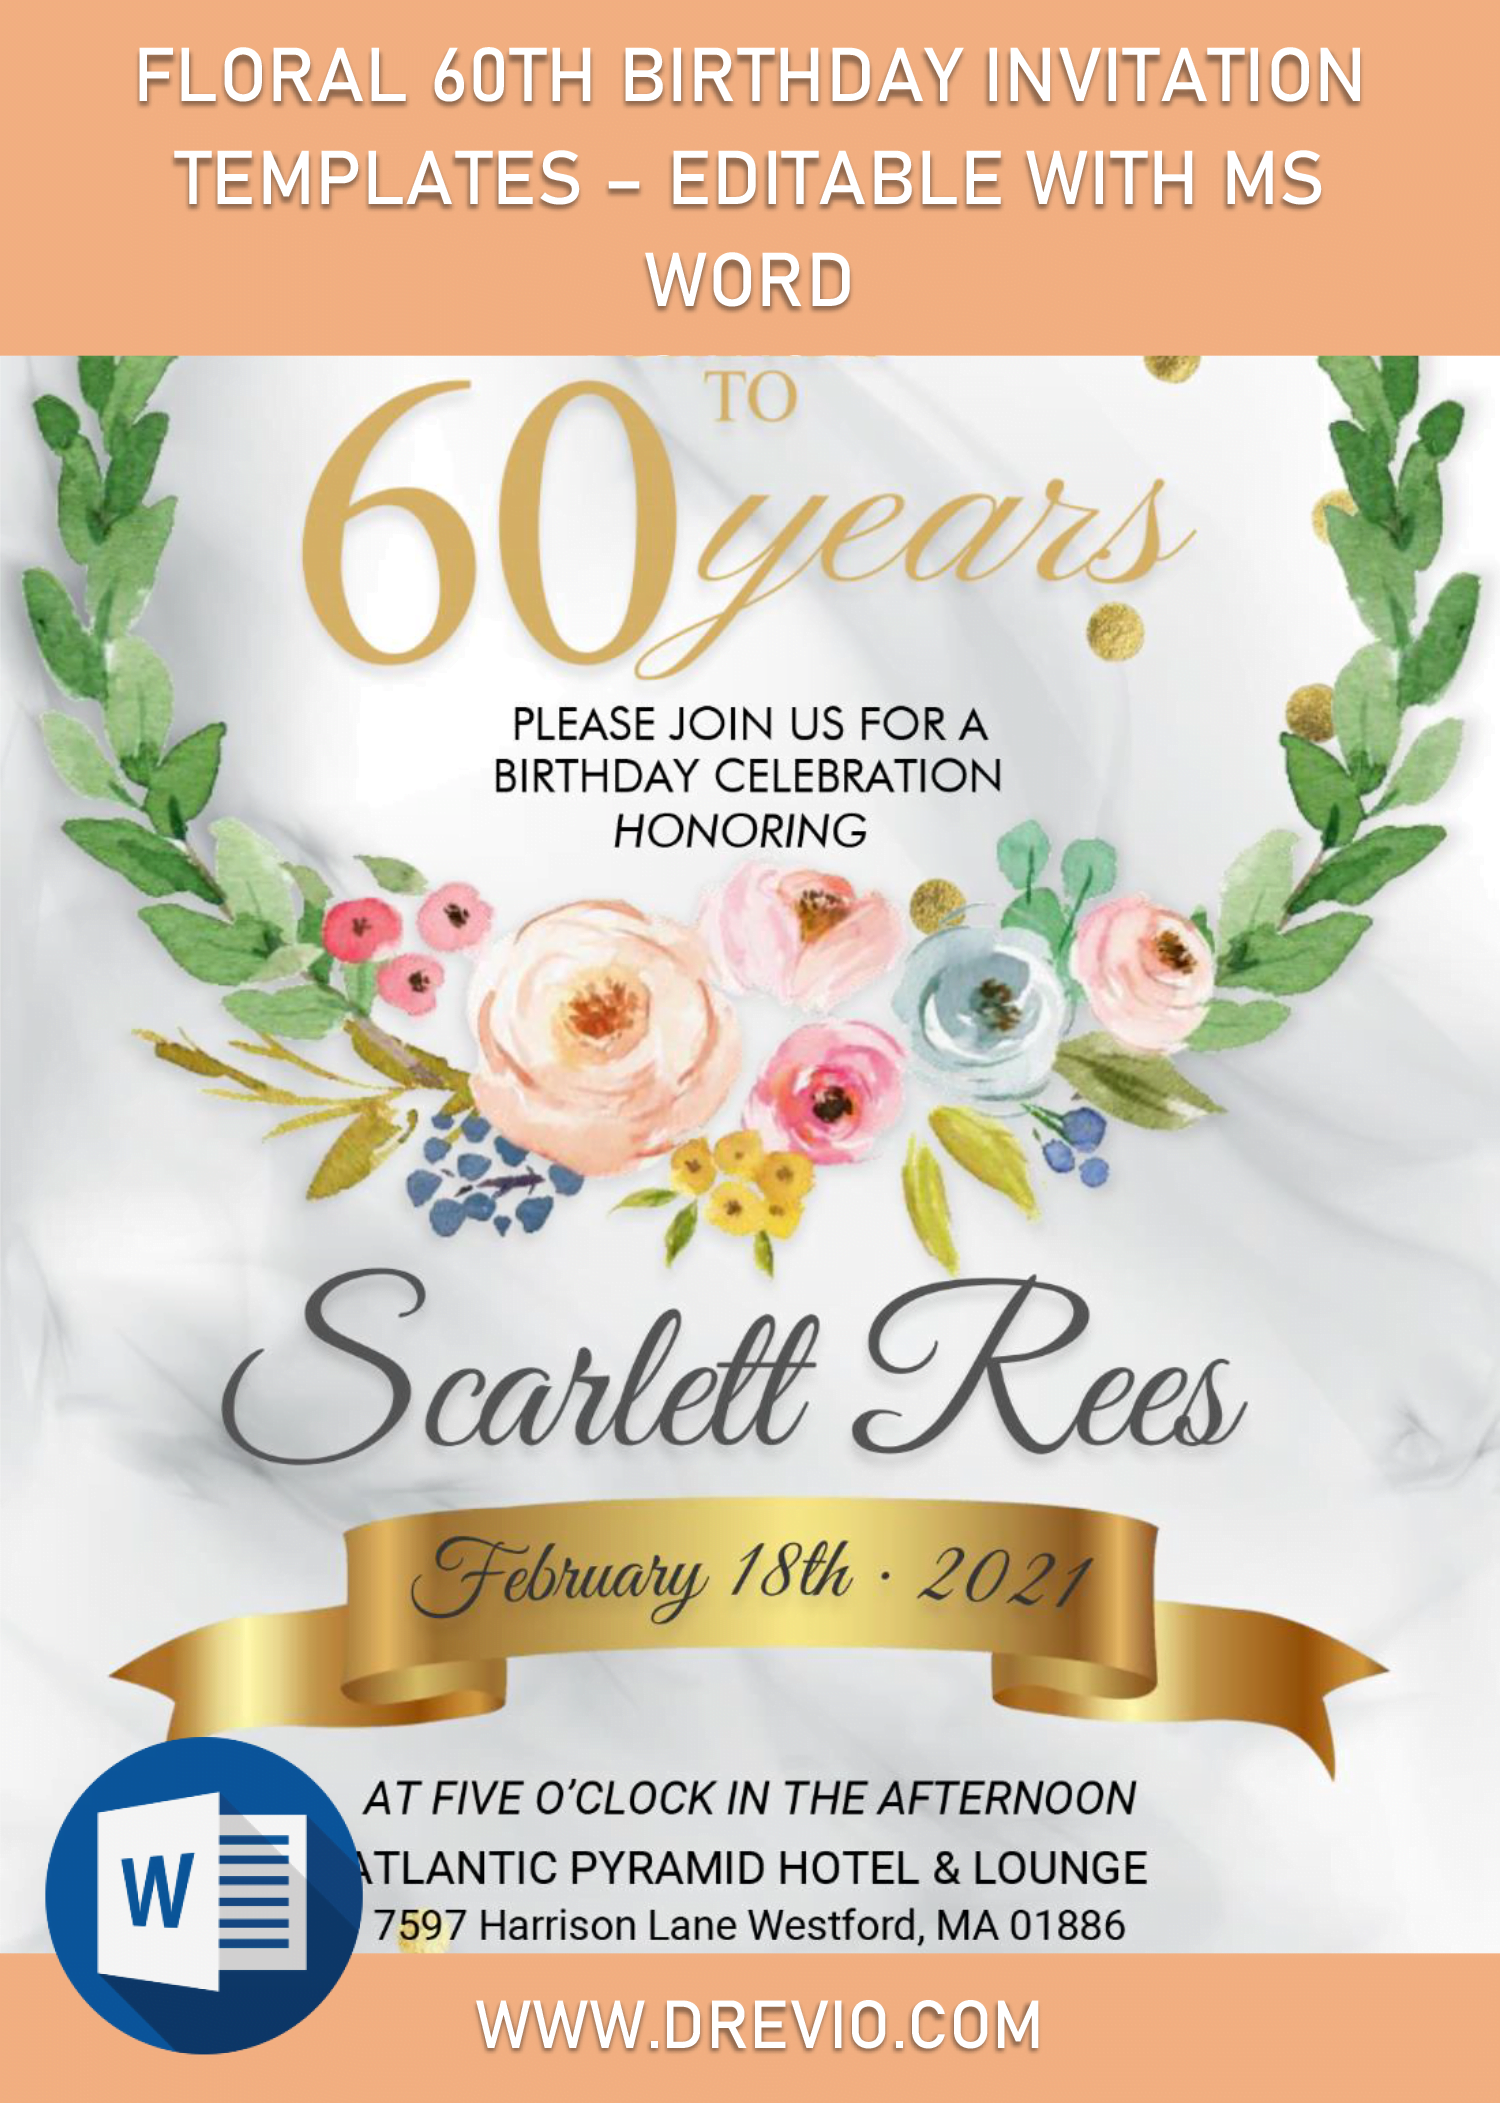 60th birthday invitation card templates free download